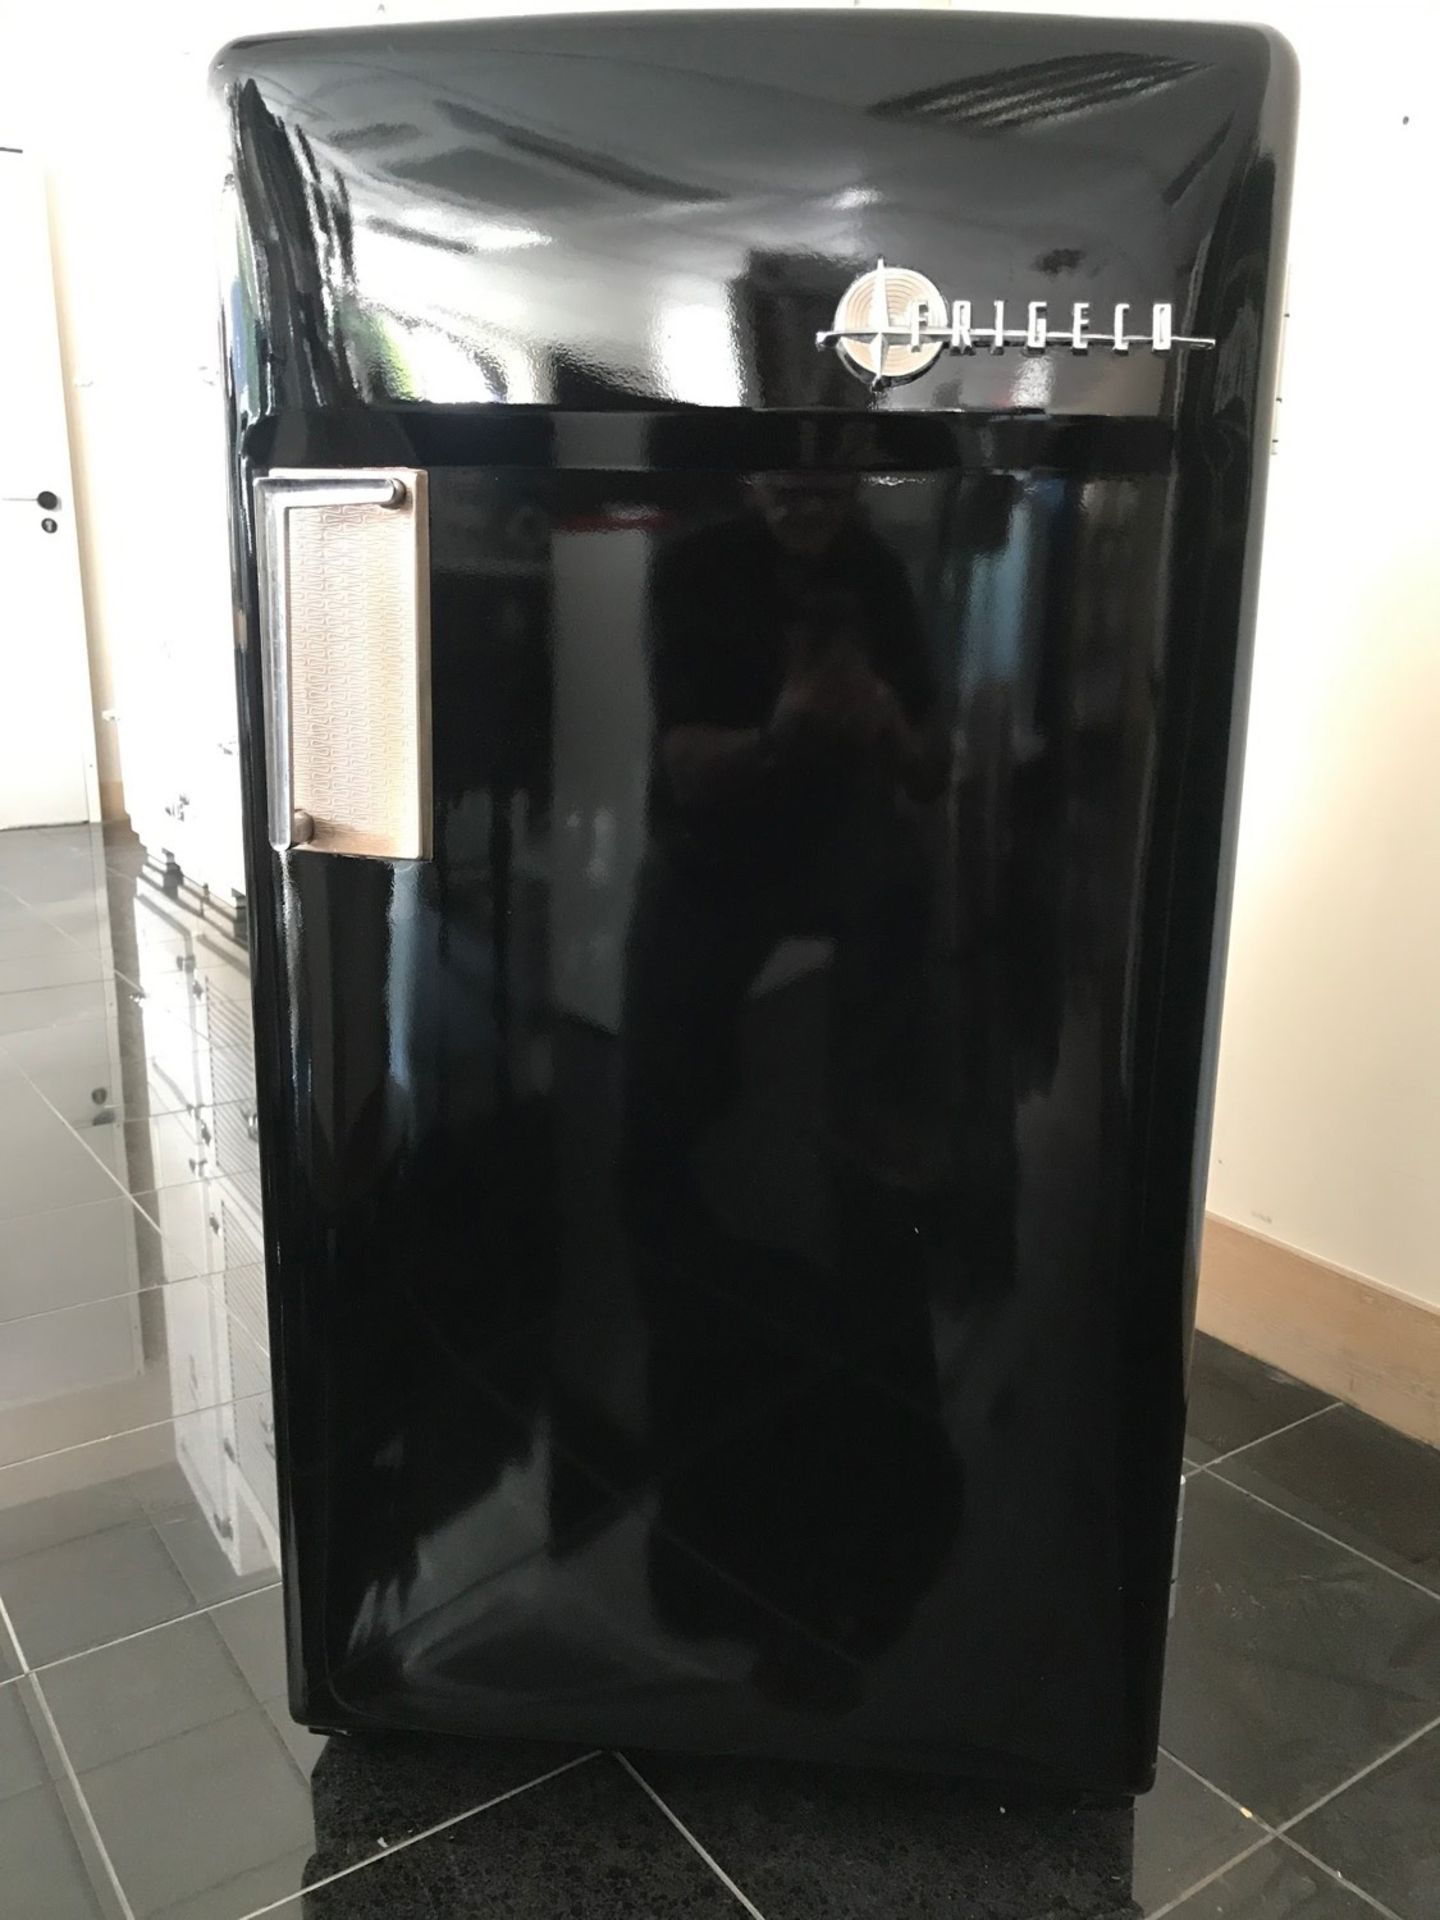 1958 Frigeco Refrigerator in Glossy Black Color